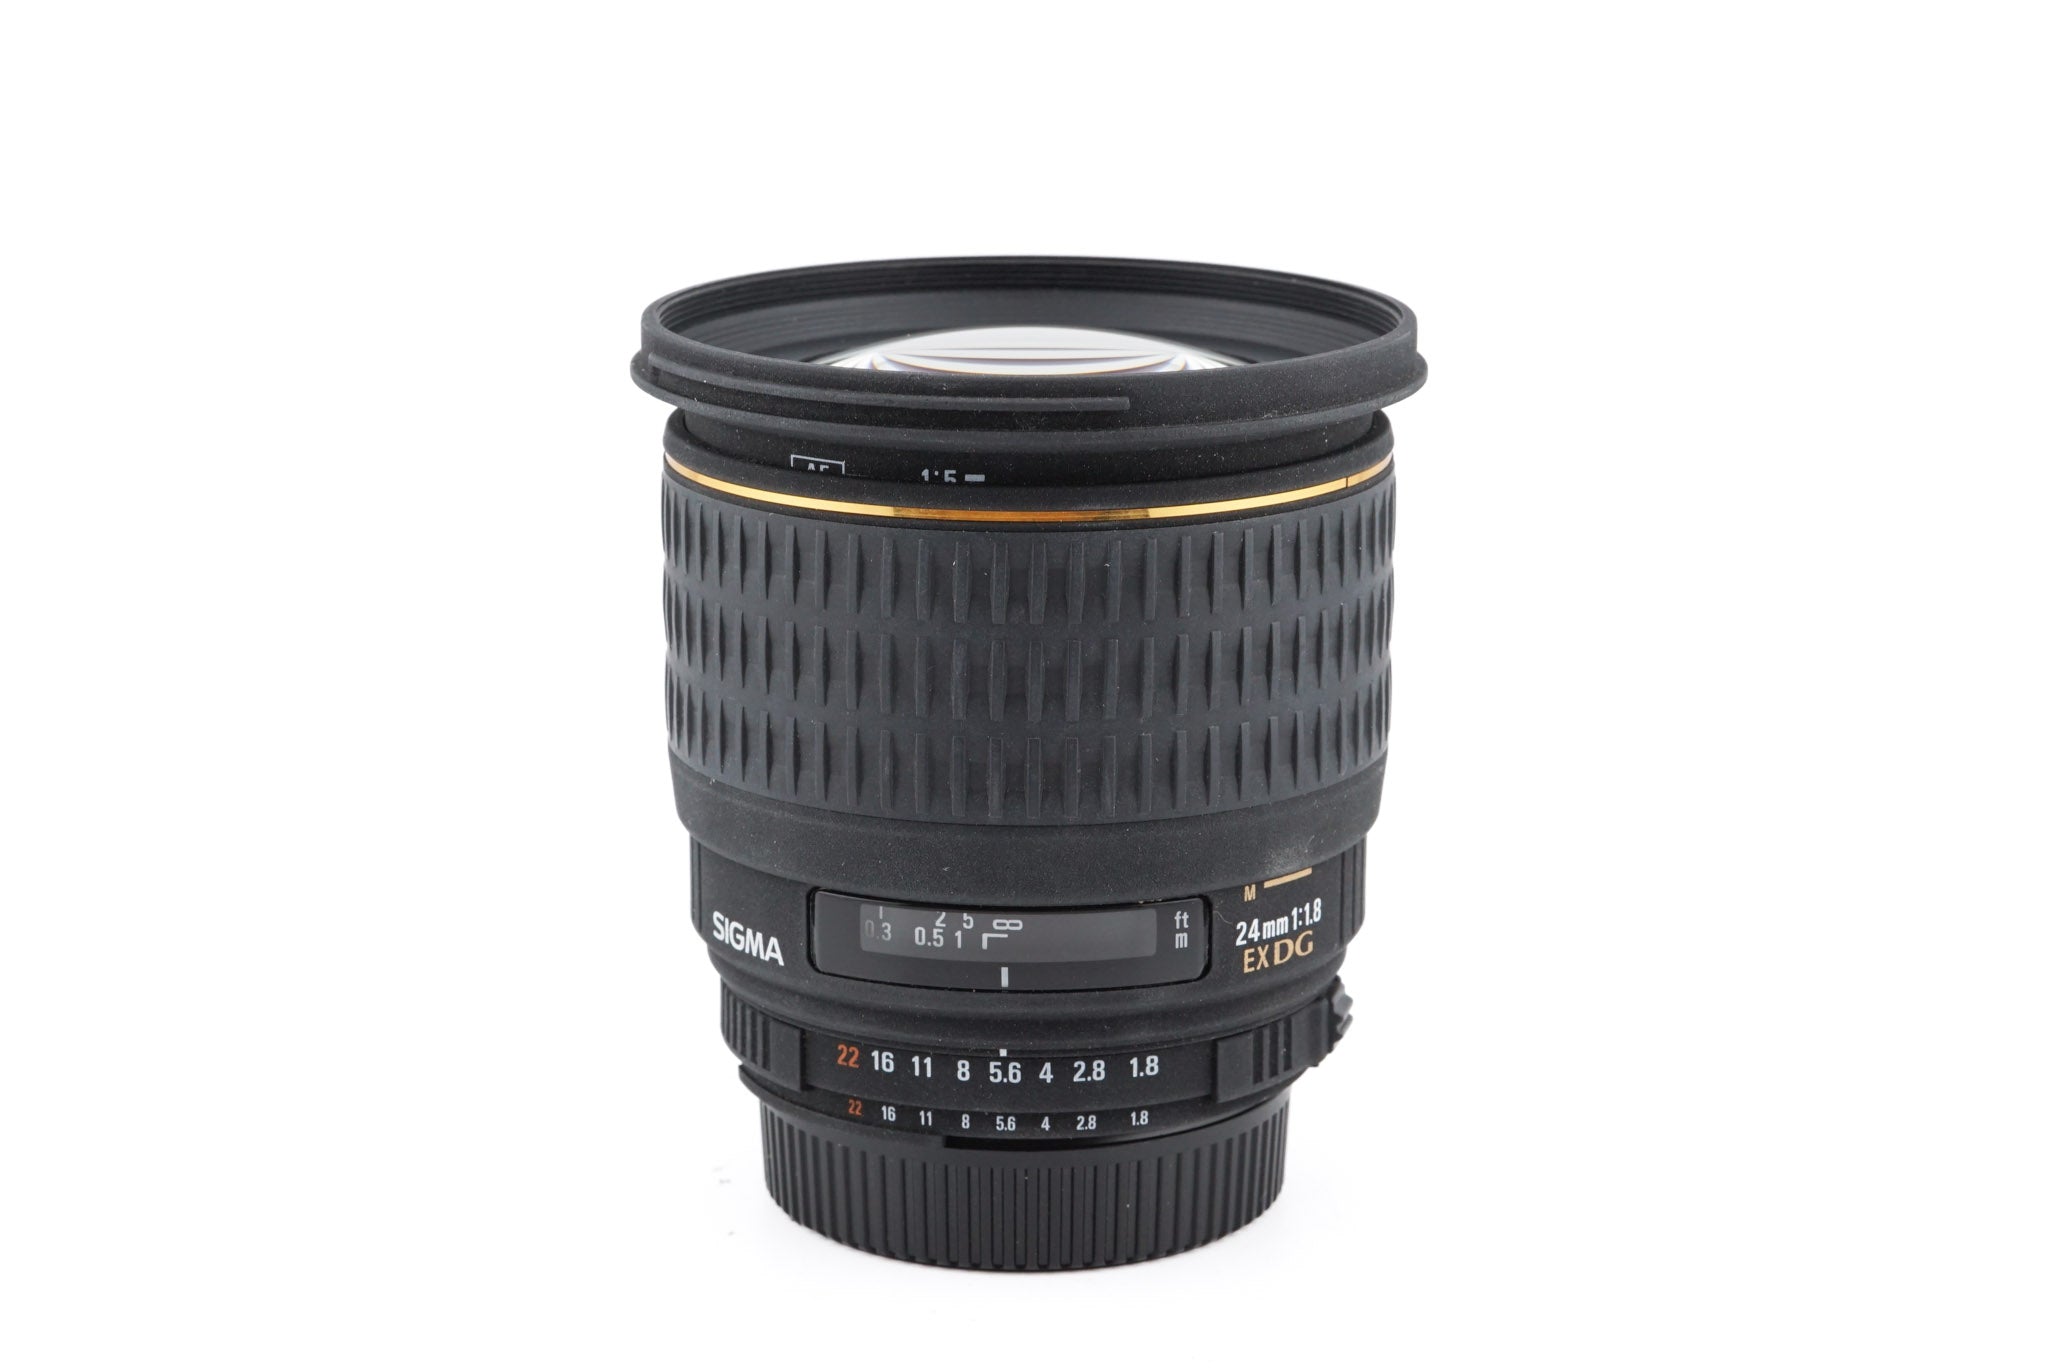 Sigma 24mm f1.8 D EX DG Macro - Lens